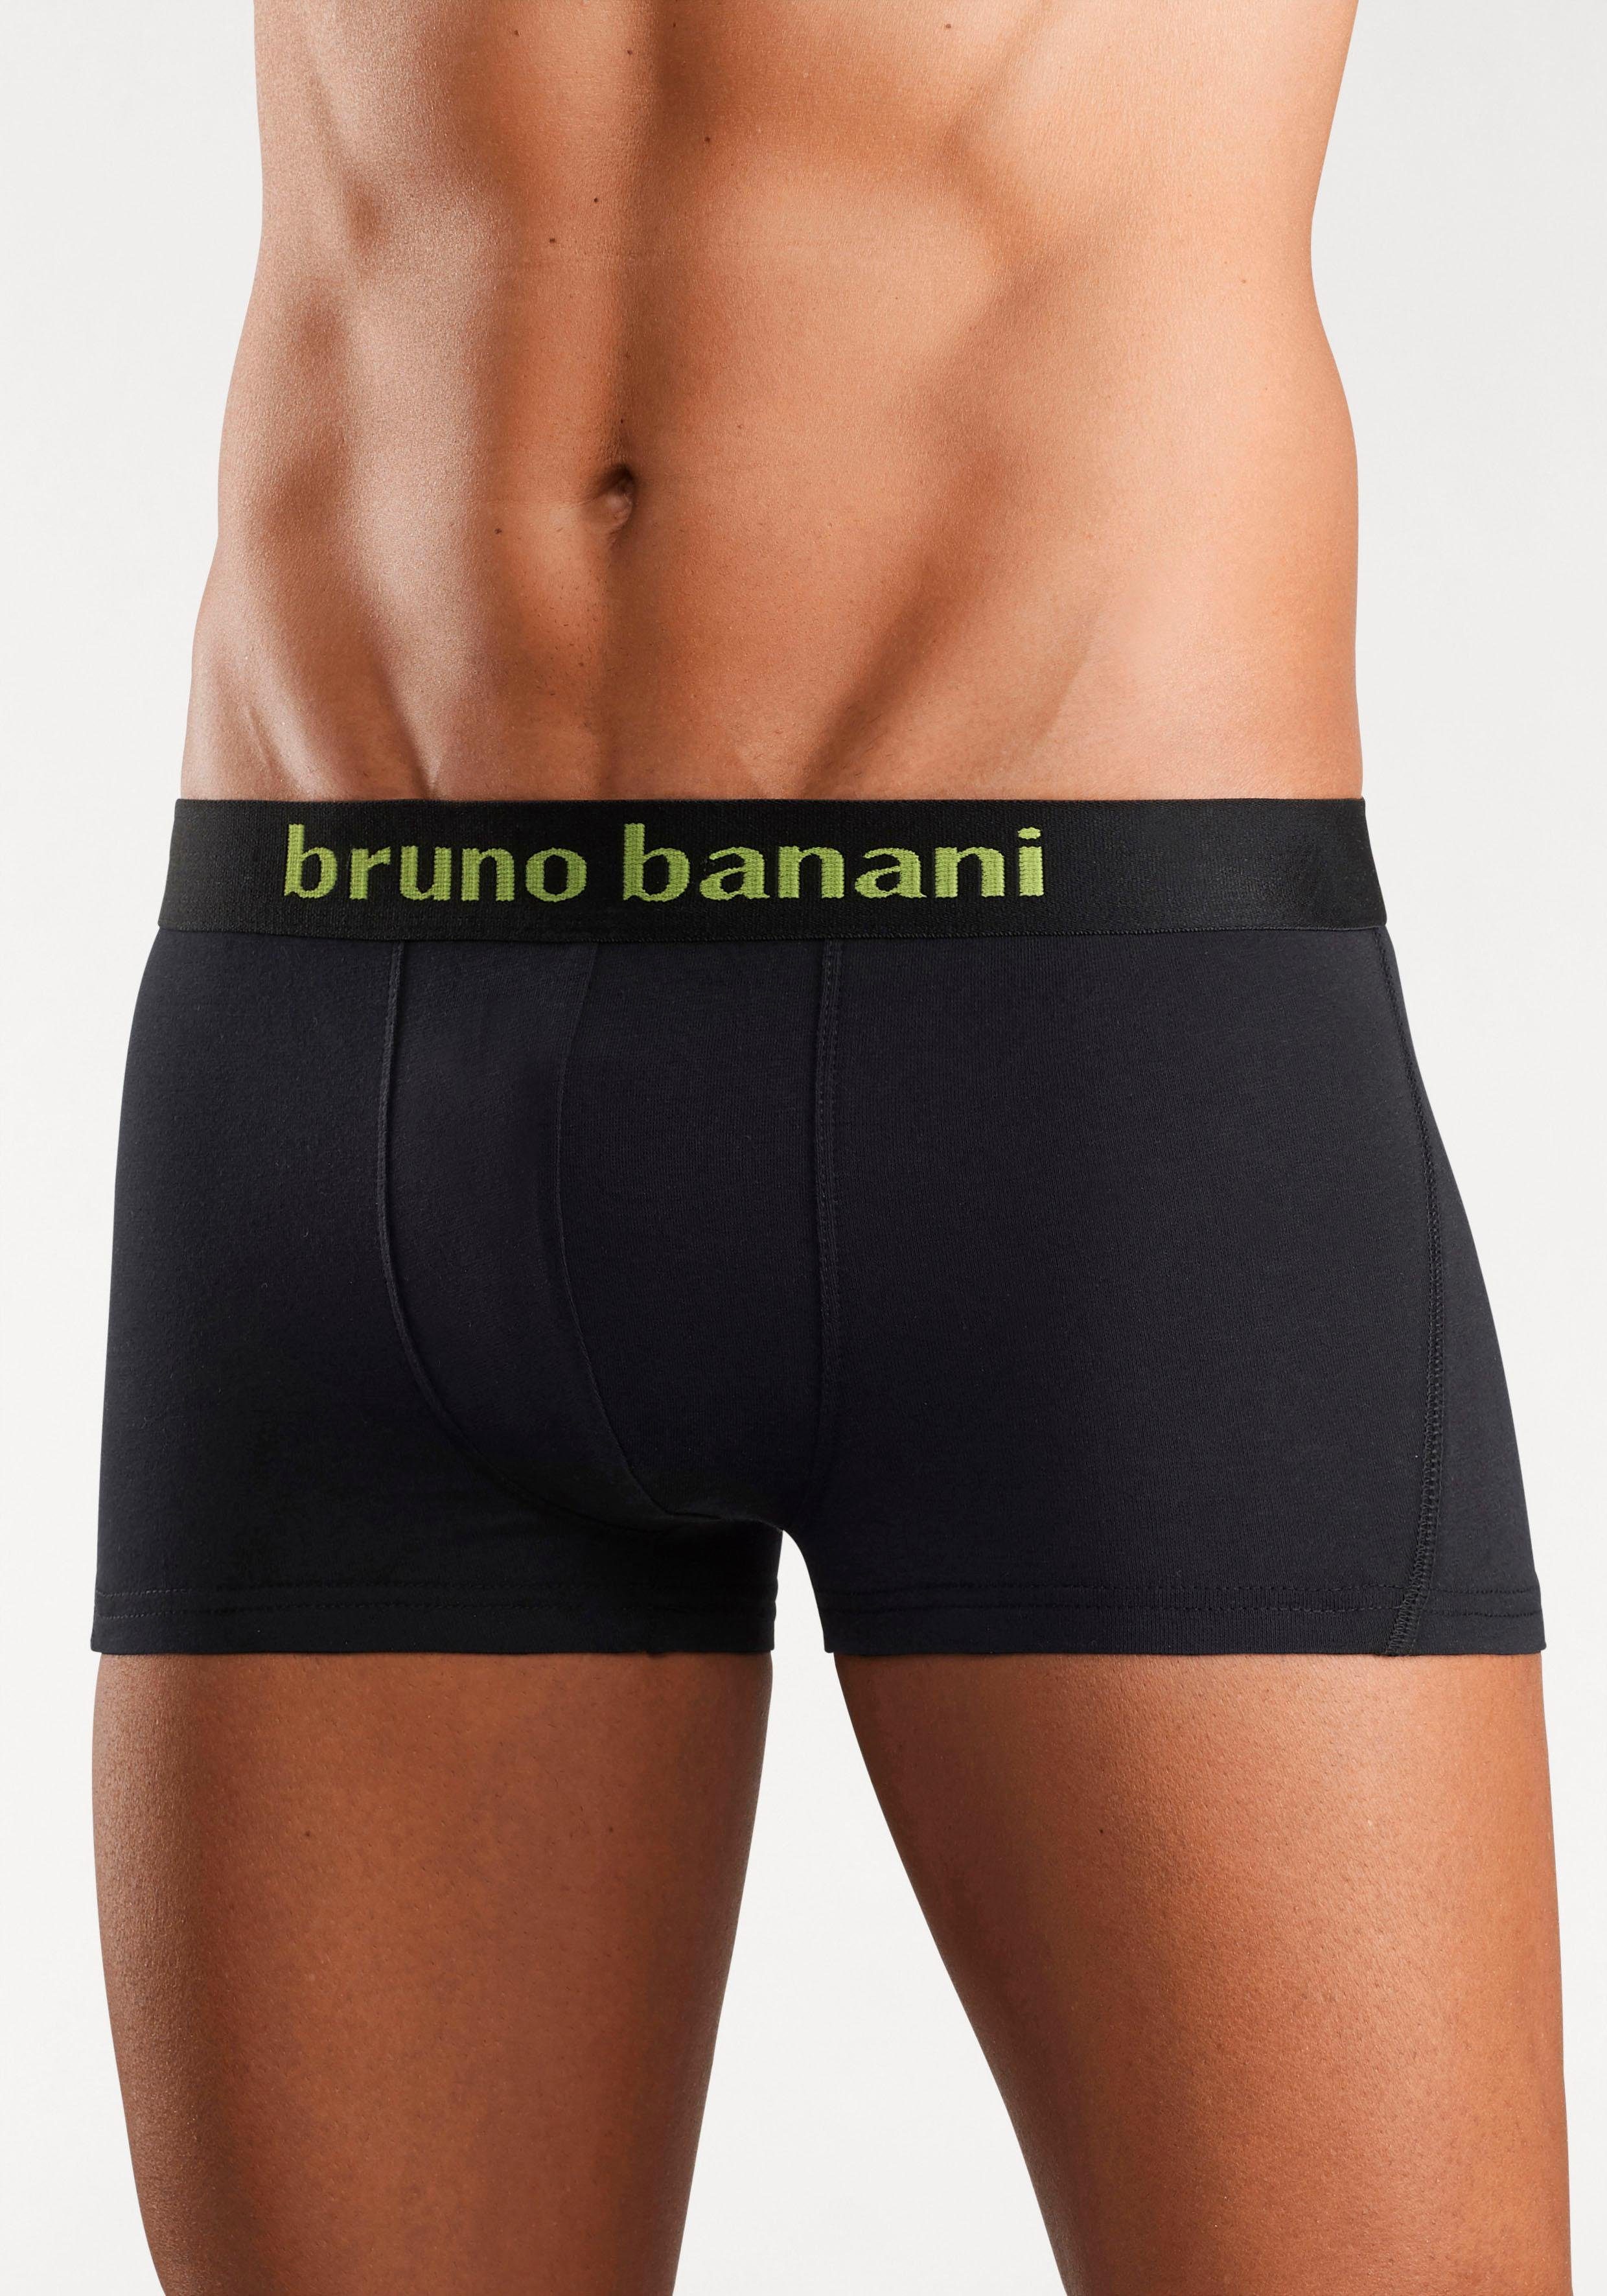 mit 4-St) (Packung, Logo Boxershorts schwarz Banani Webbund Bruno in Hipster-Form